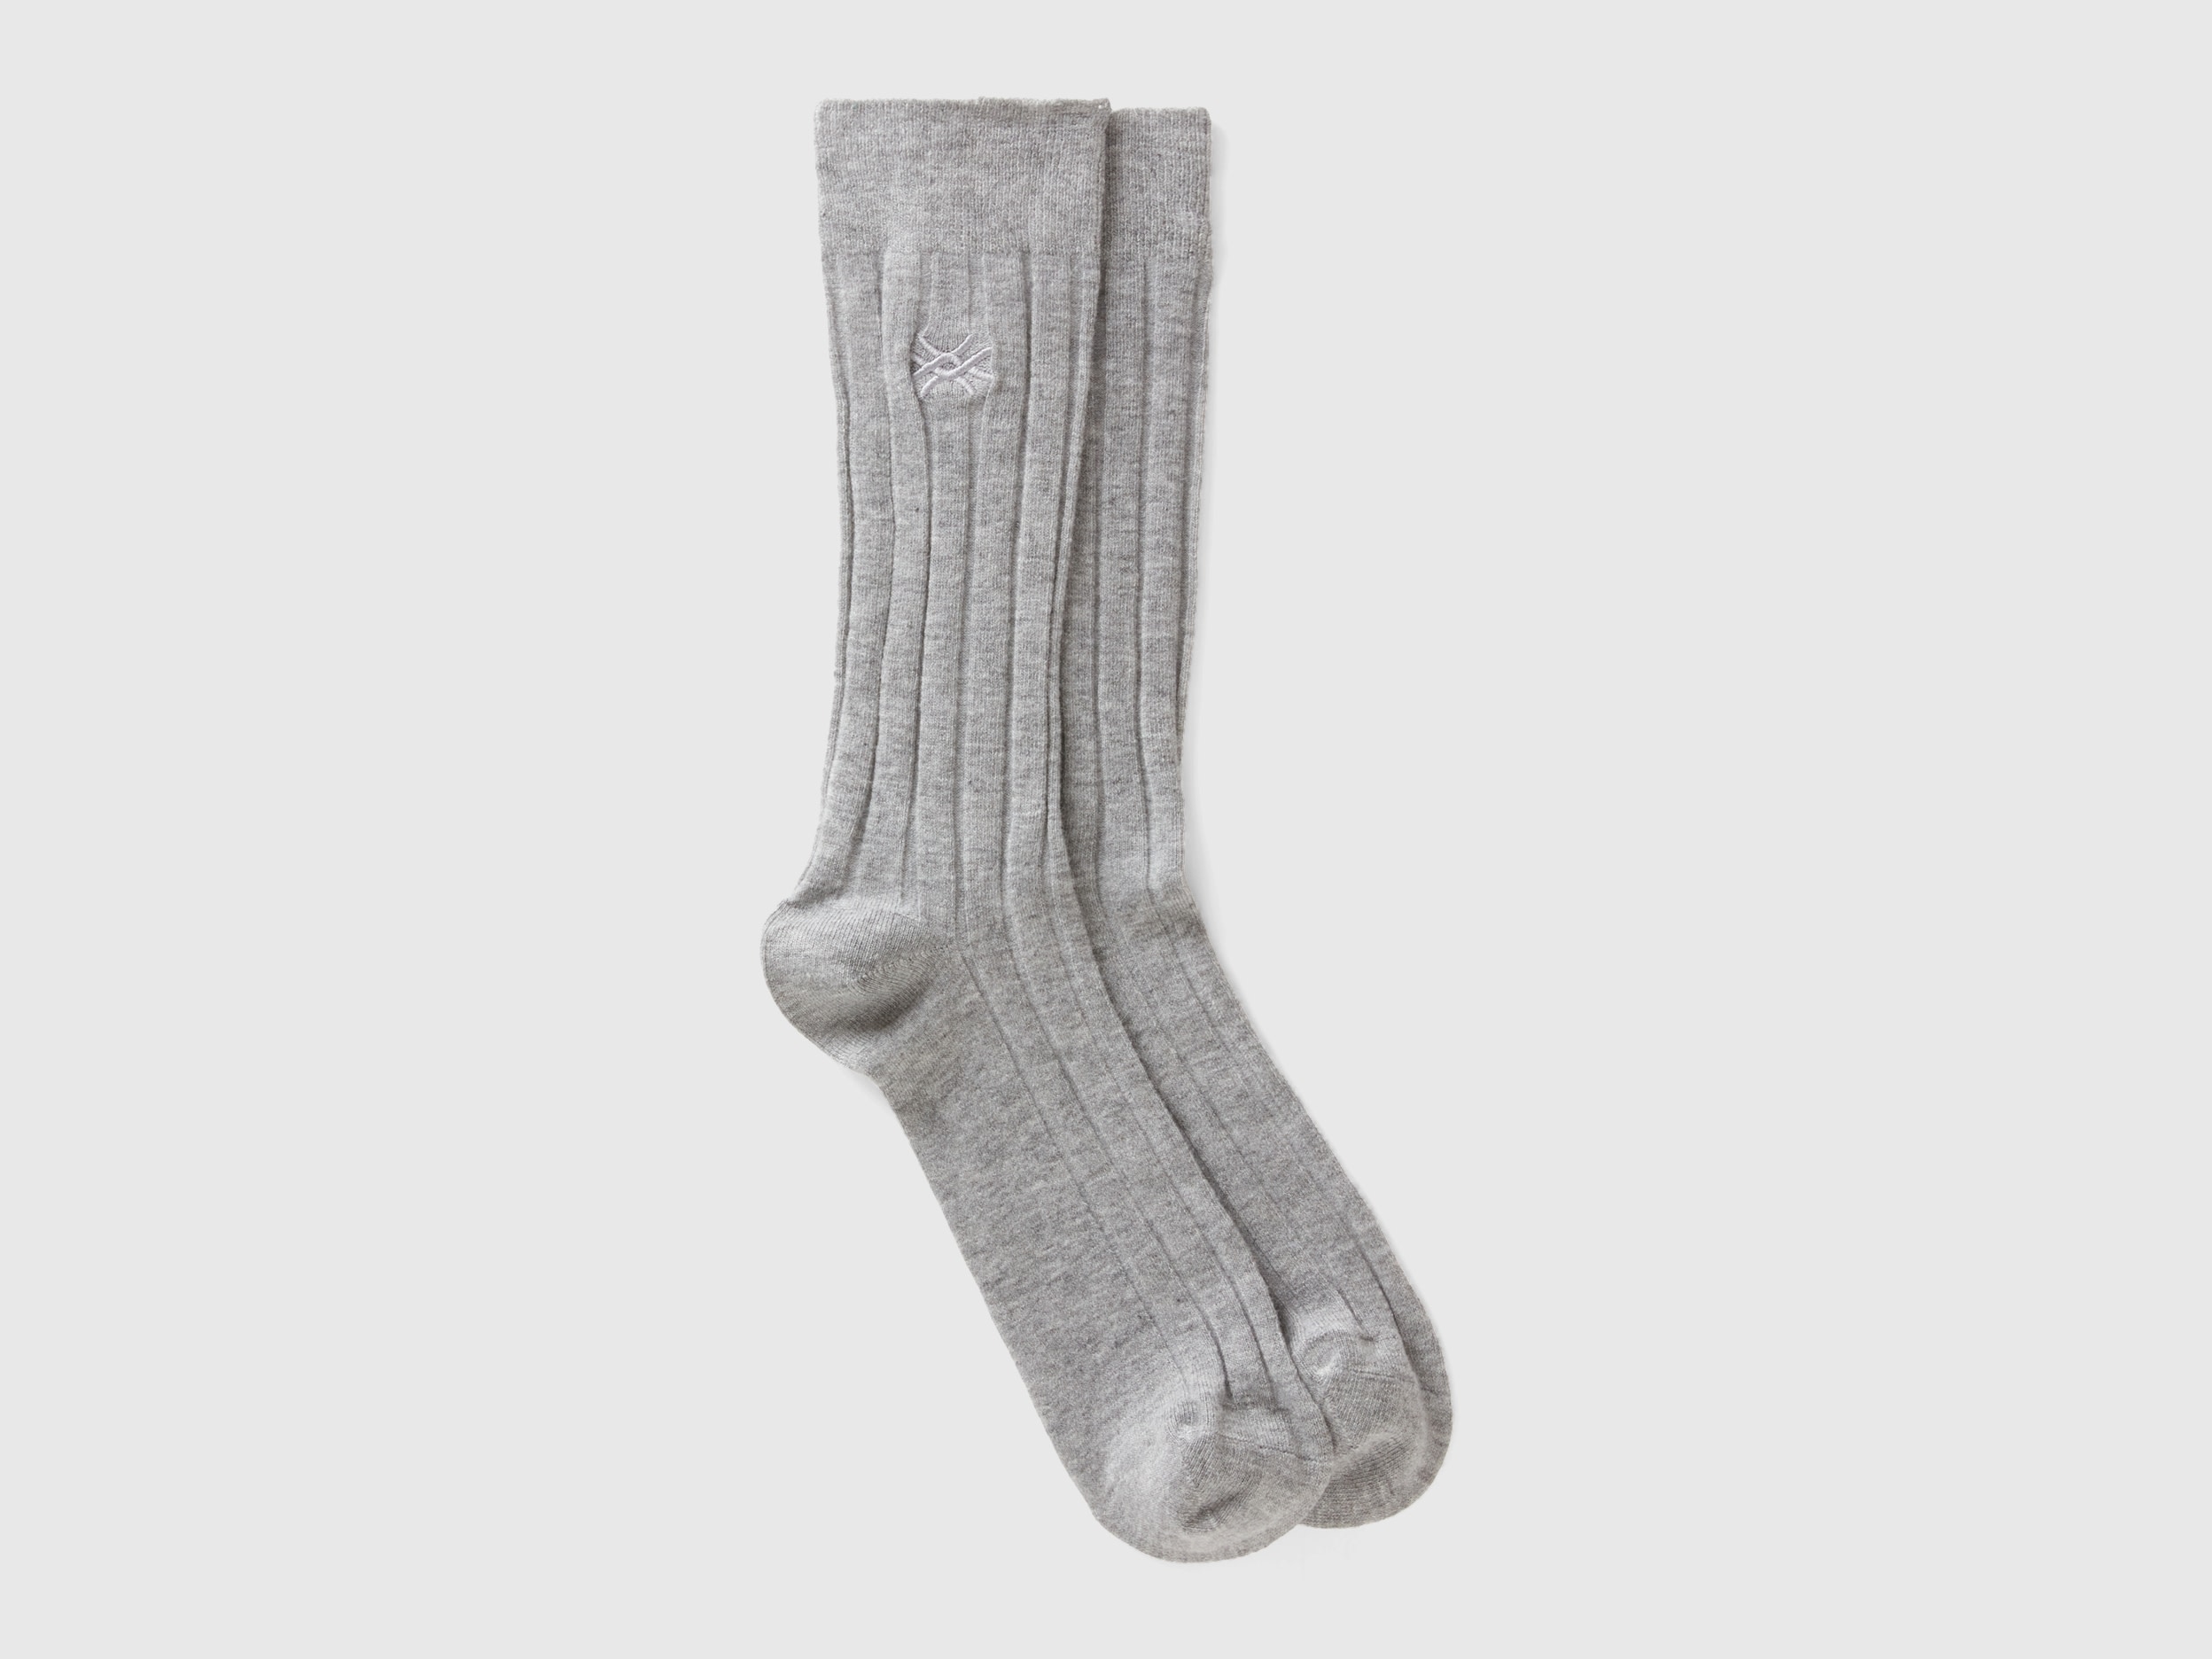 Benetton, Socks In Cashmere Blend, size 8-11, Gray, Women